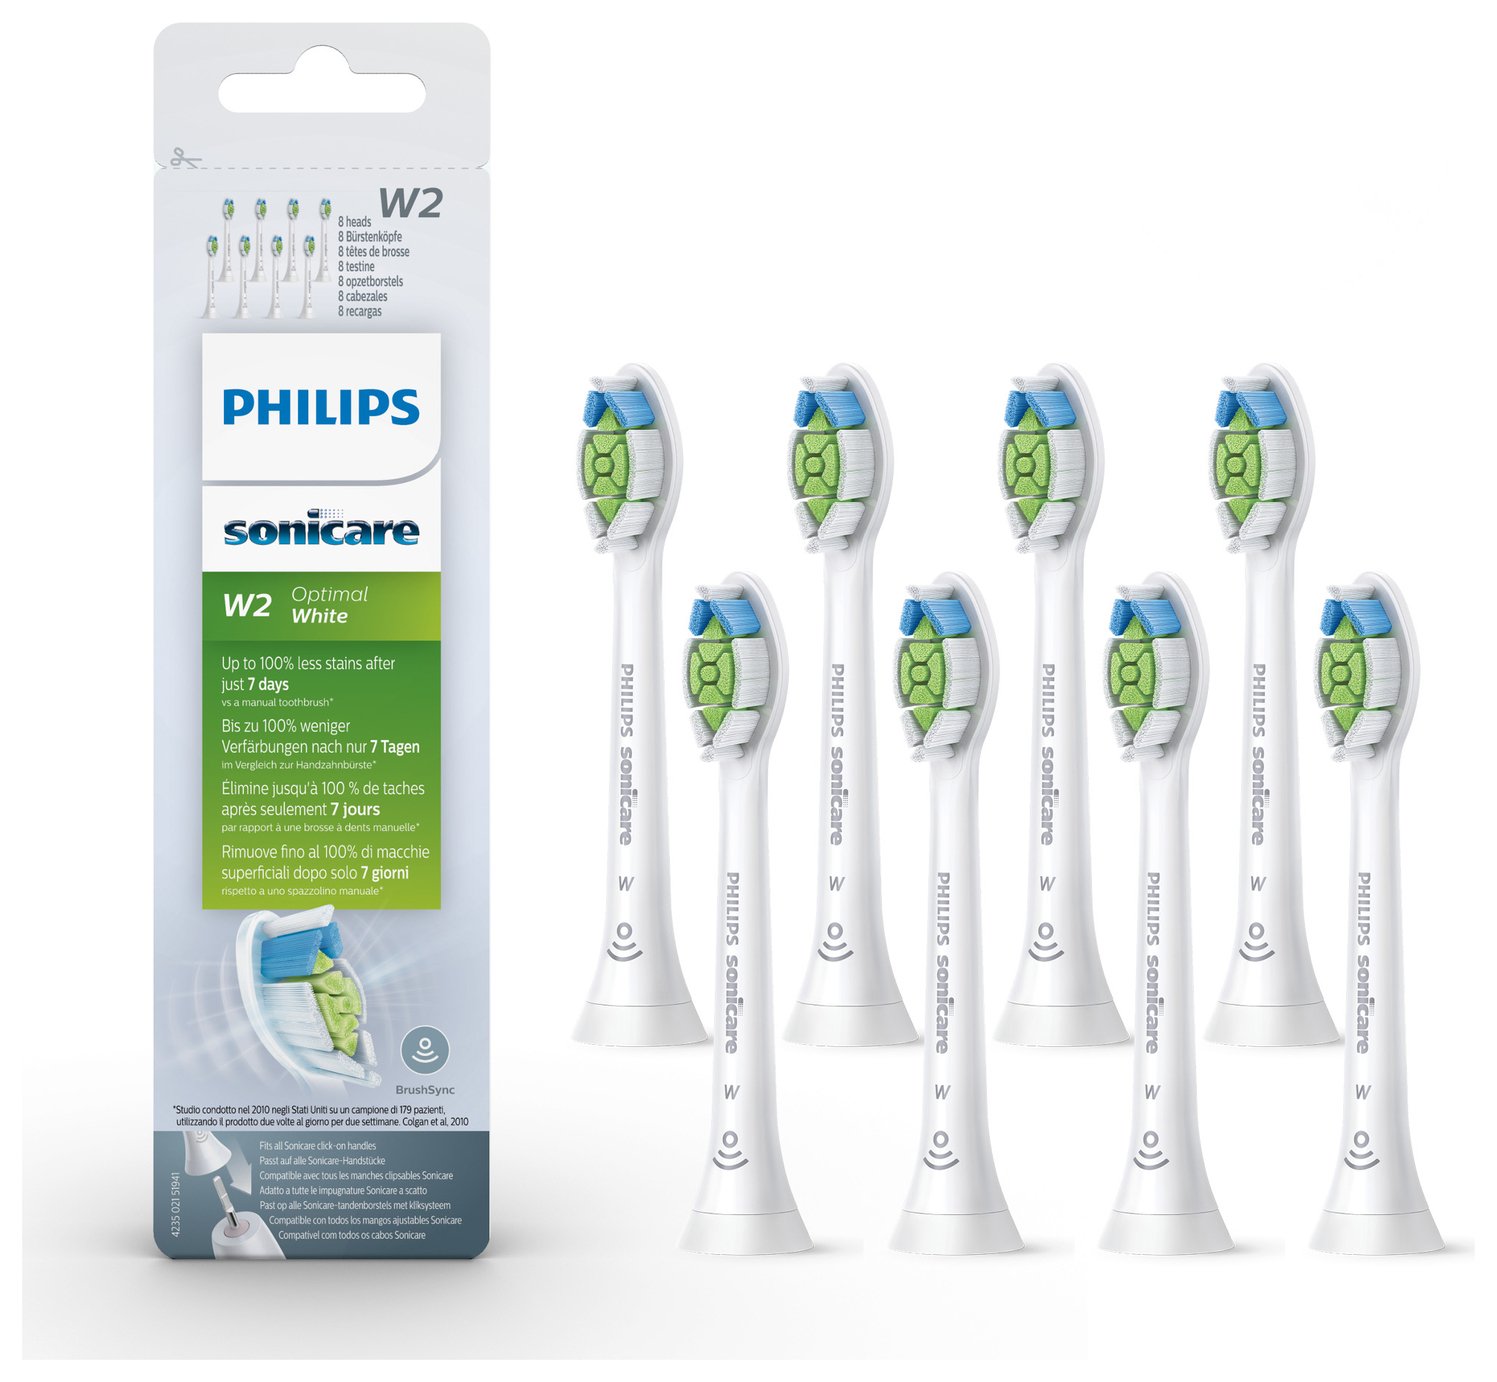 Philips Sonicare W2 Optimal White Brush Head - White 8 Pack